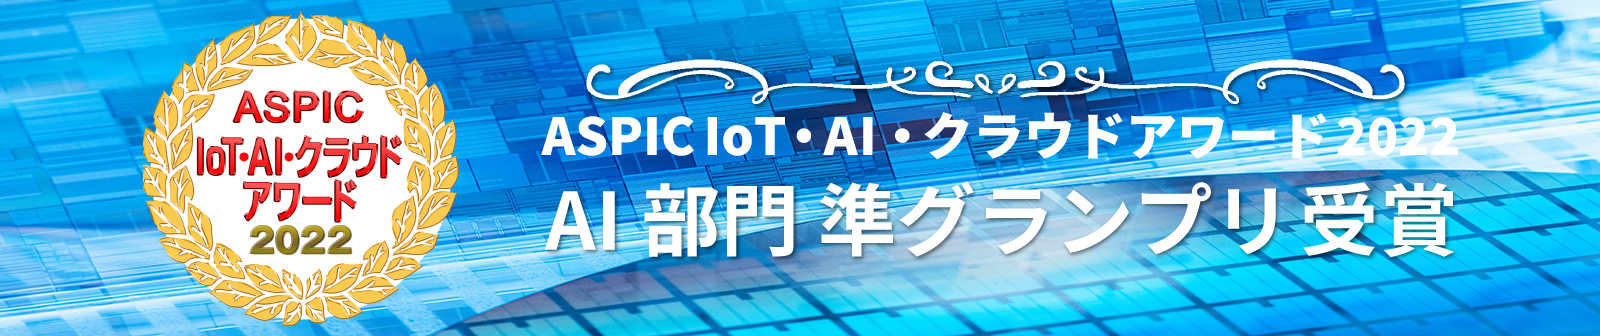 ASPIC IoT・AI・クラウドアワード2022 AI部門準グランプリ受賞